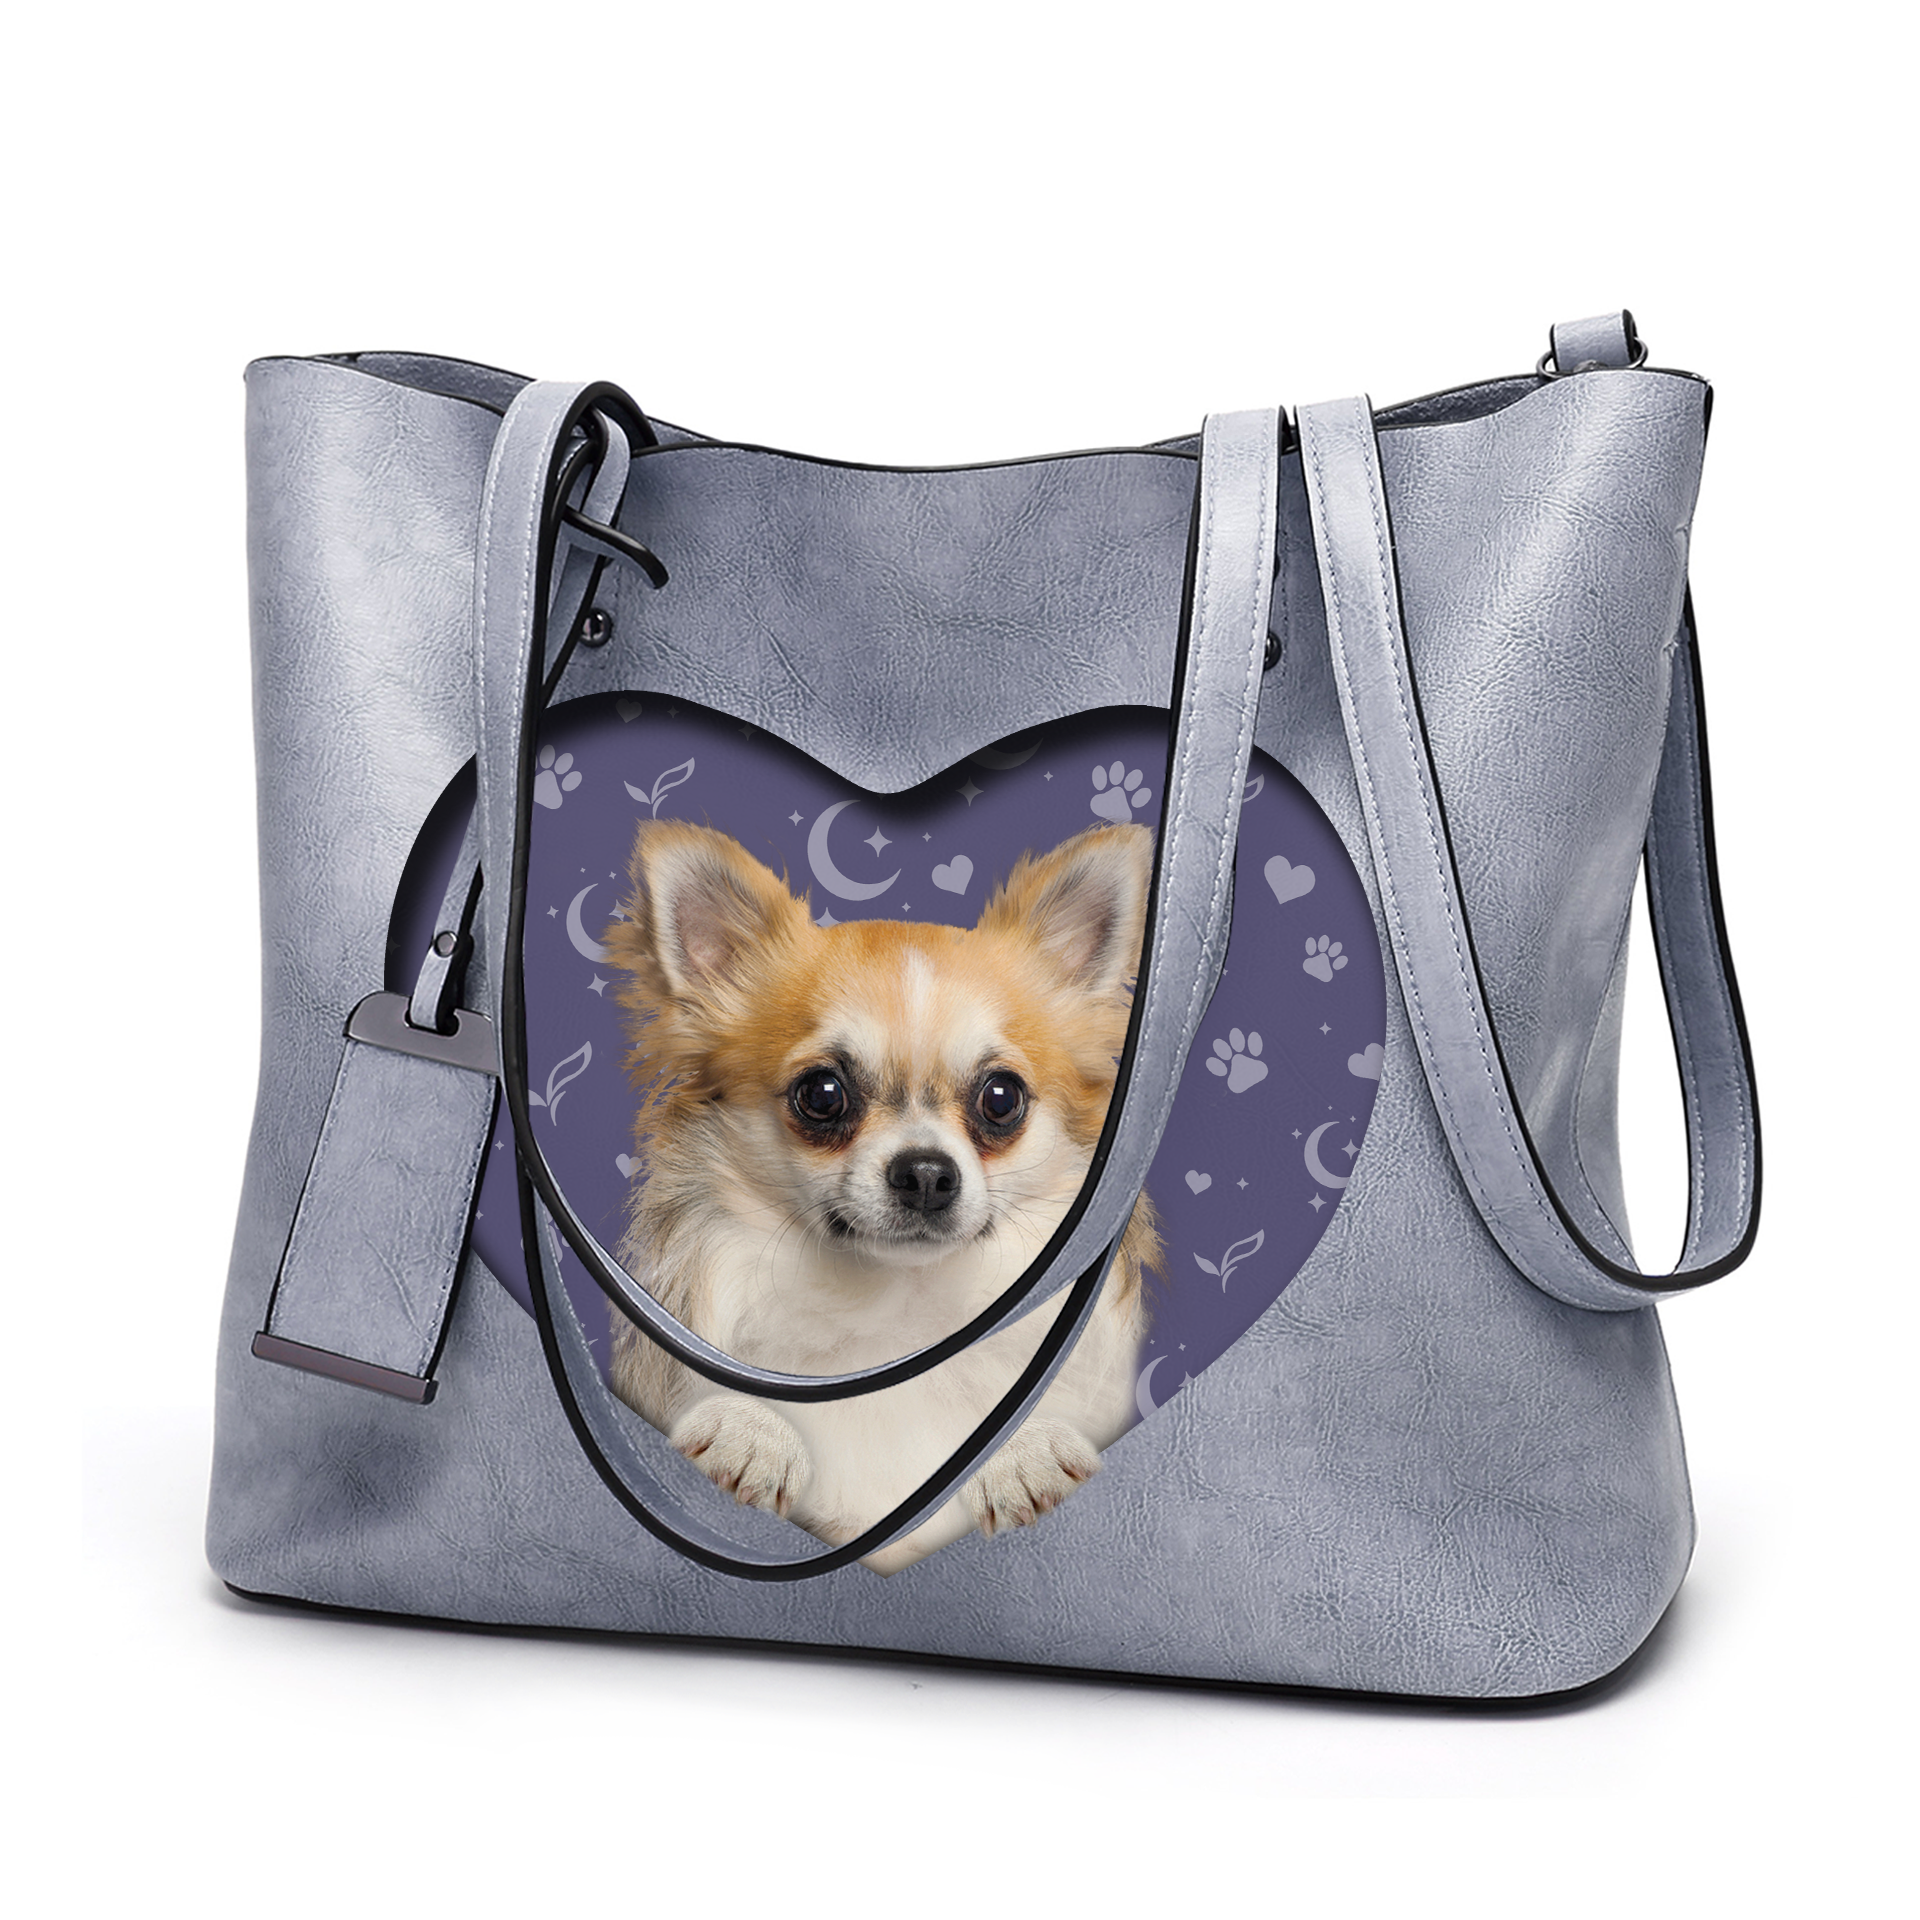 I Know I'm Cute - Chihuahua Glamour Handbag V4 - 9